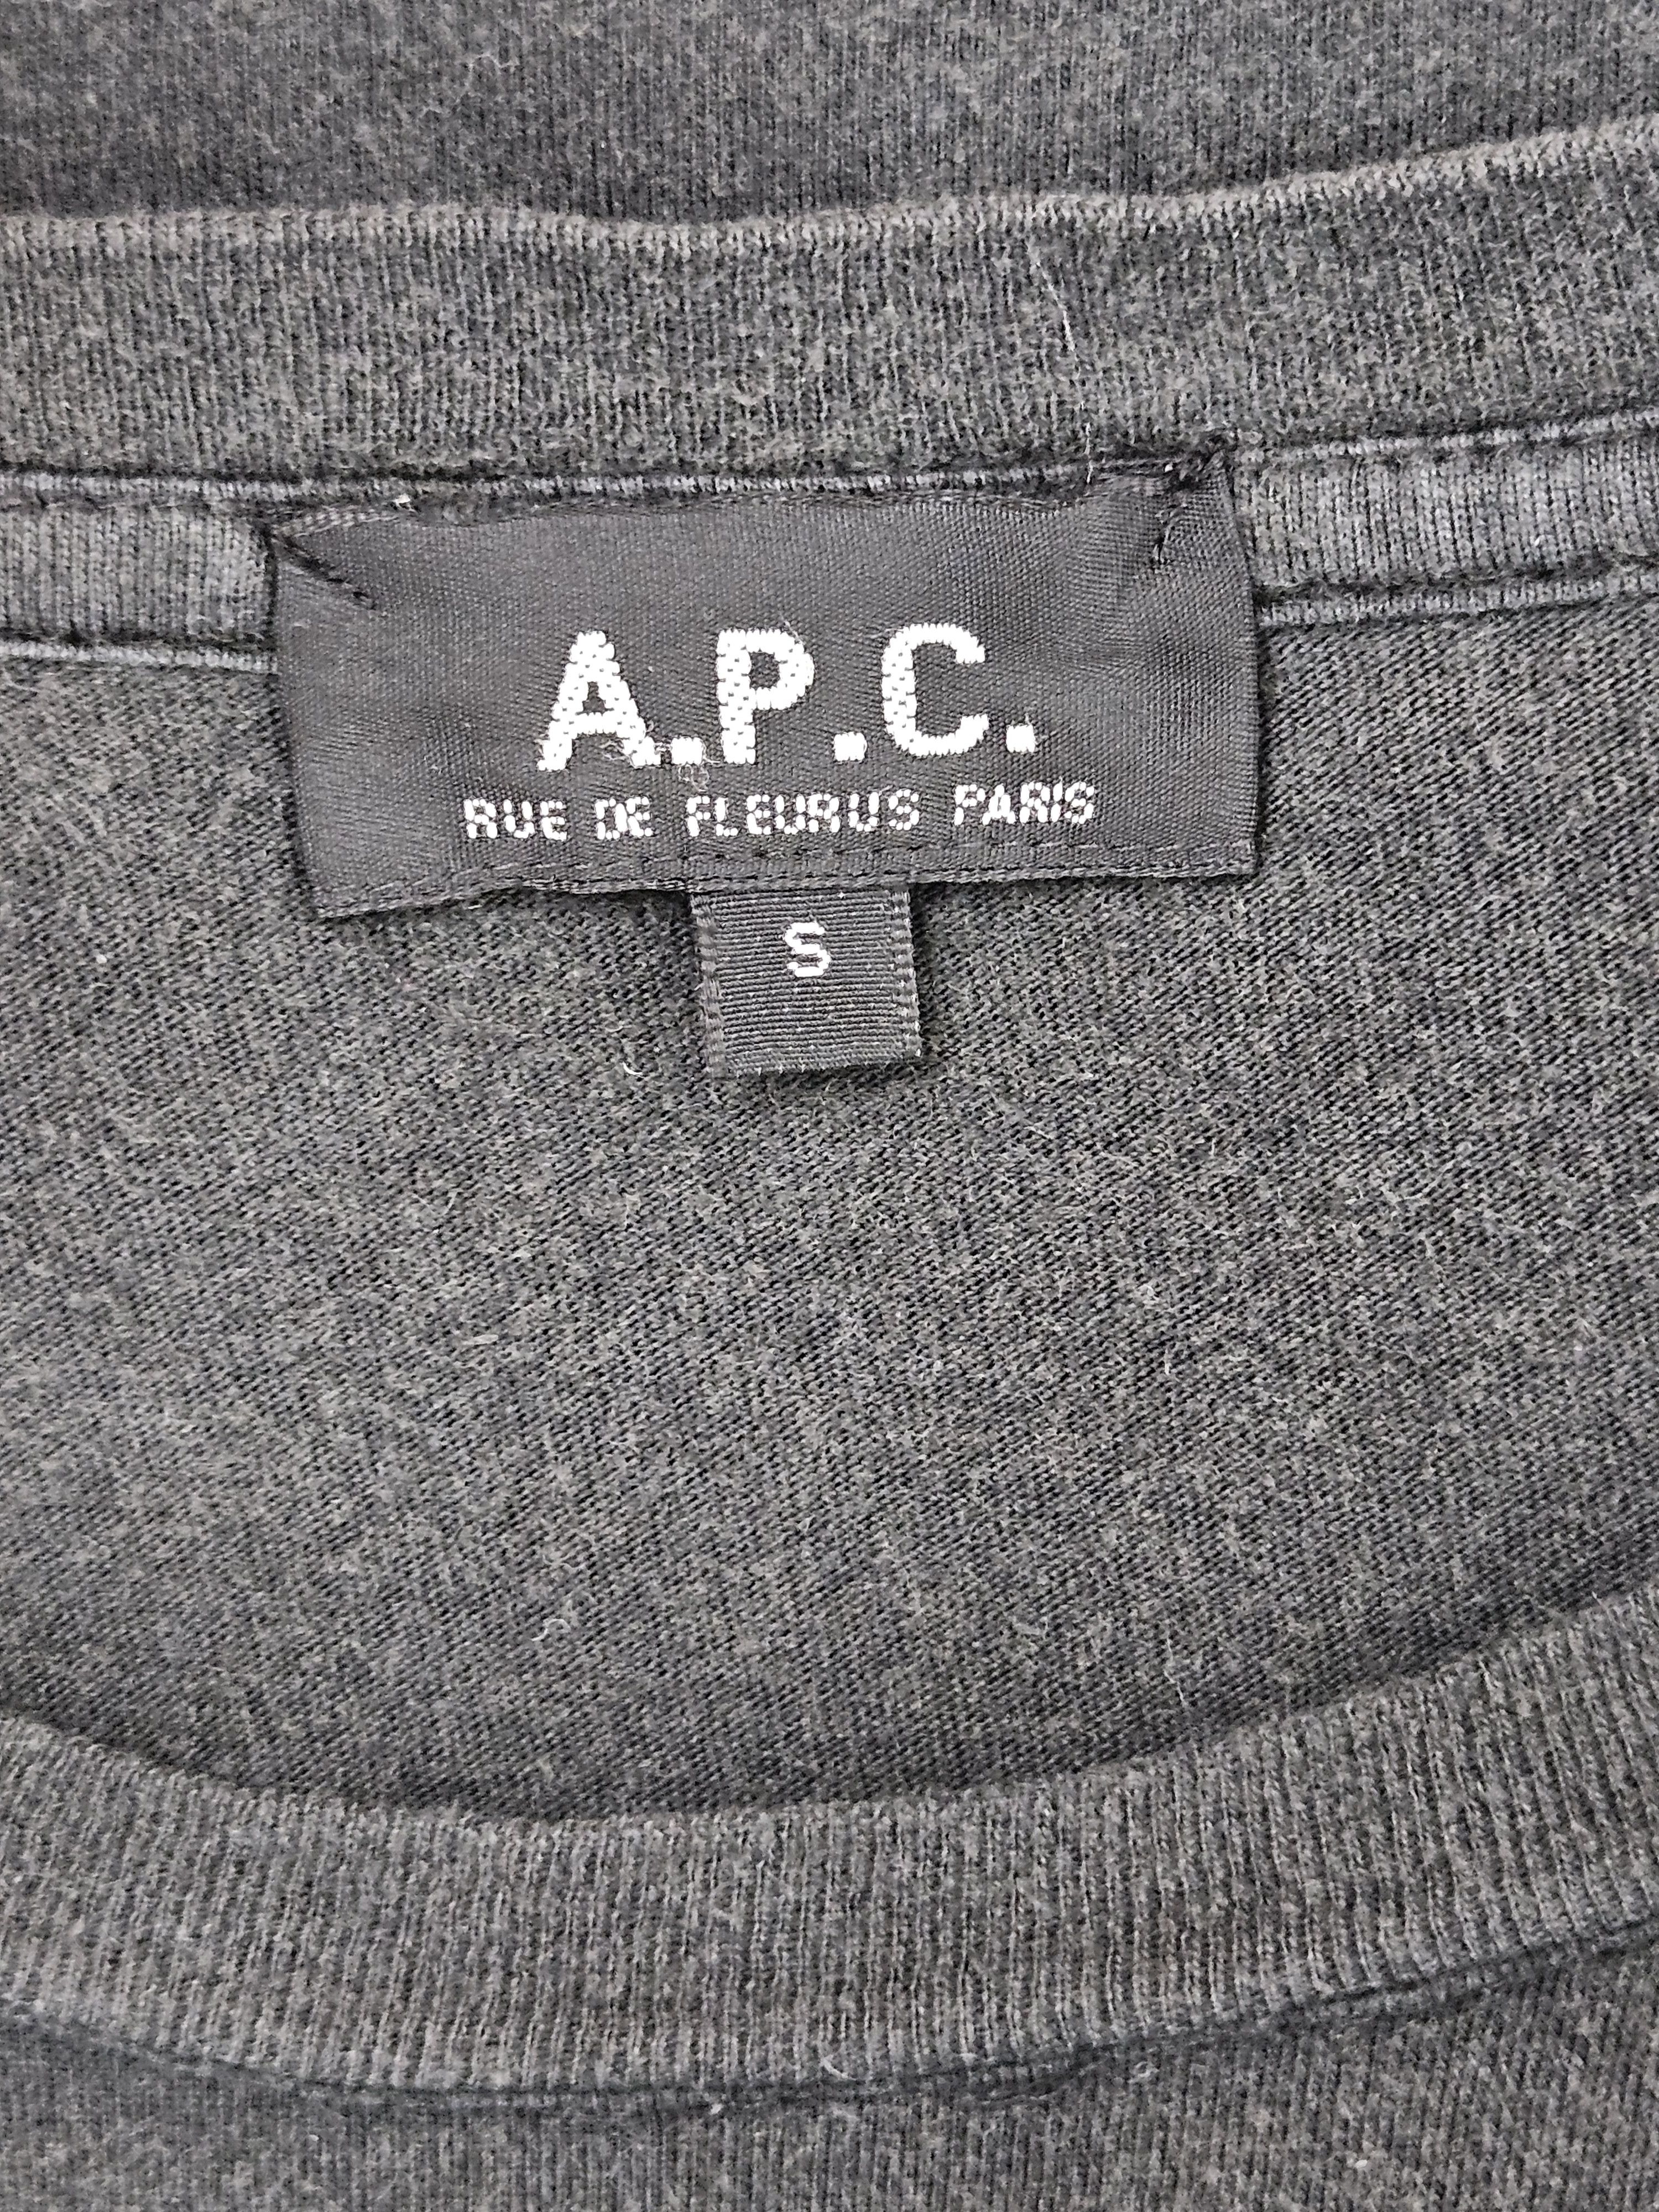 A.P.C. Reu de Fleurus Lion Shirt - 4